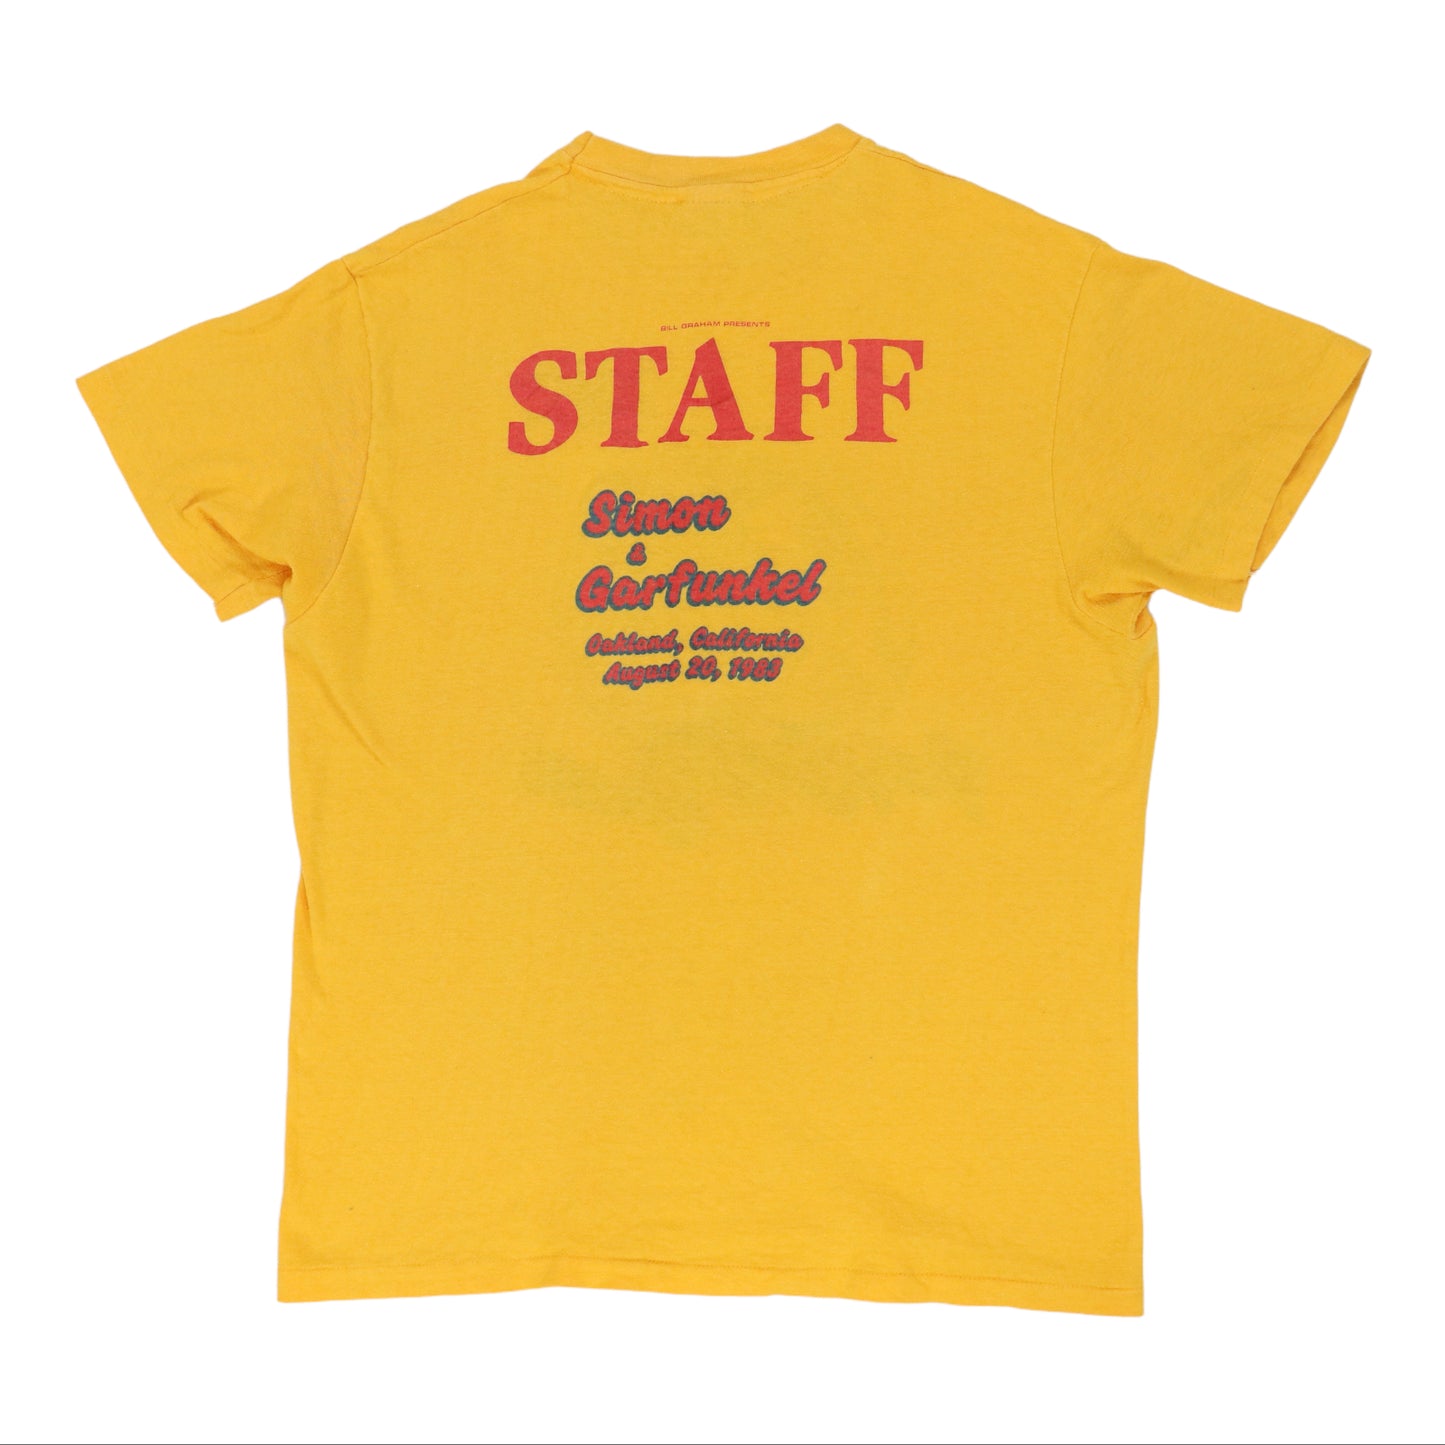 1983 Simon & Garfunkel Day On The Green Concert Staff Shirt